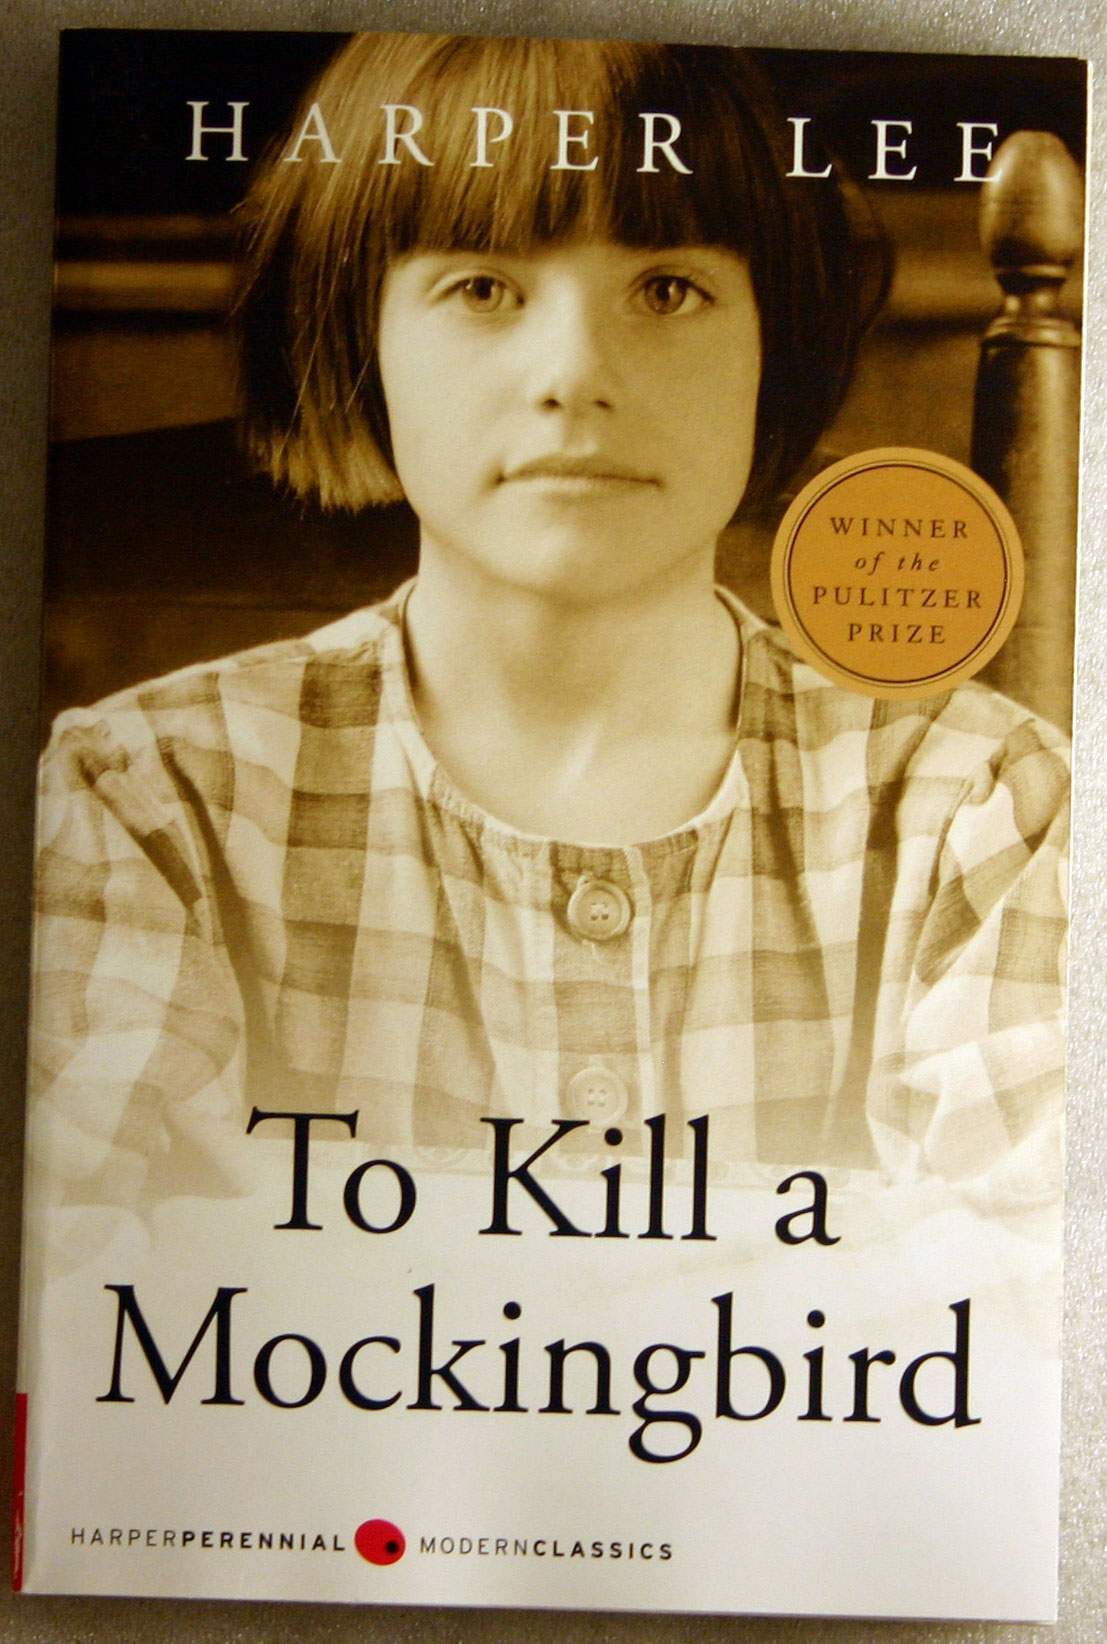 Eleven Classic Covers of Harper Lee's 'To Kill A Mockingbird' - Flashbak